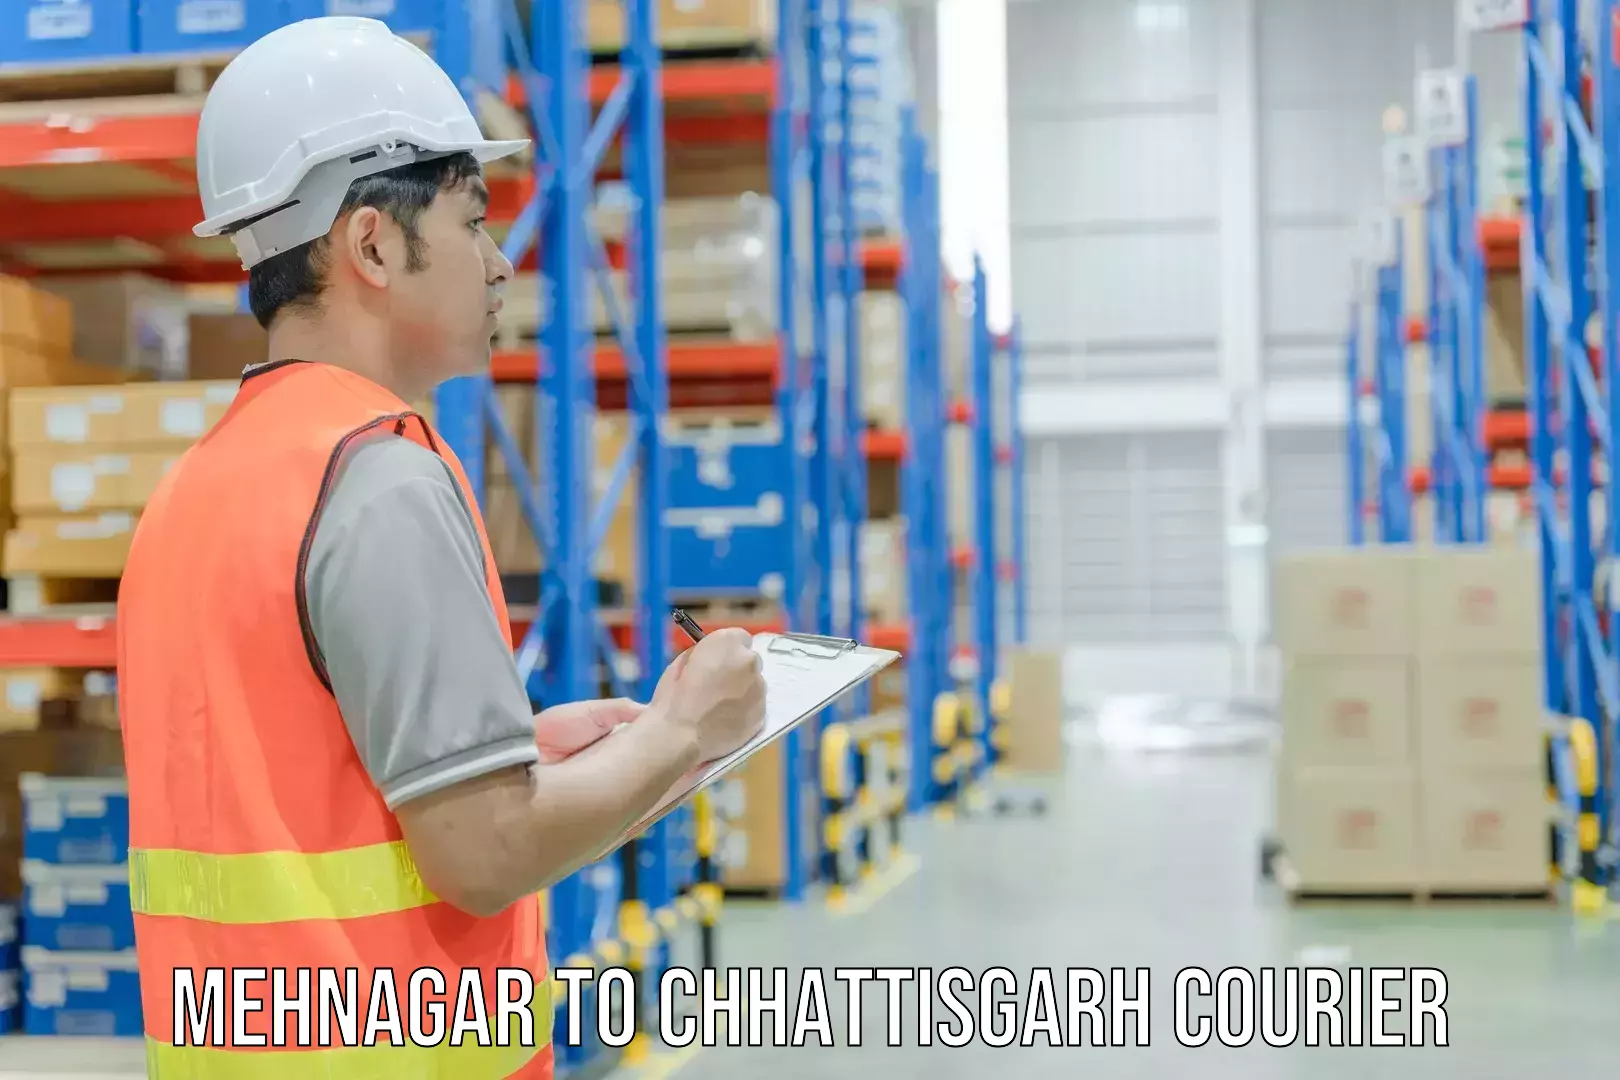 Quality courier partnerships in Mehnagar to Ramanujganj